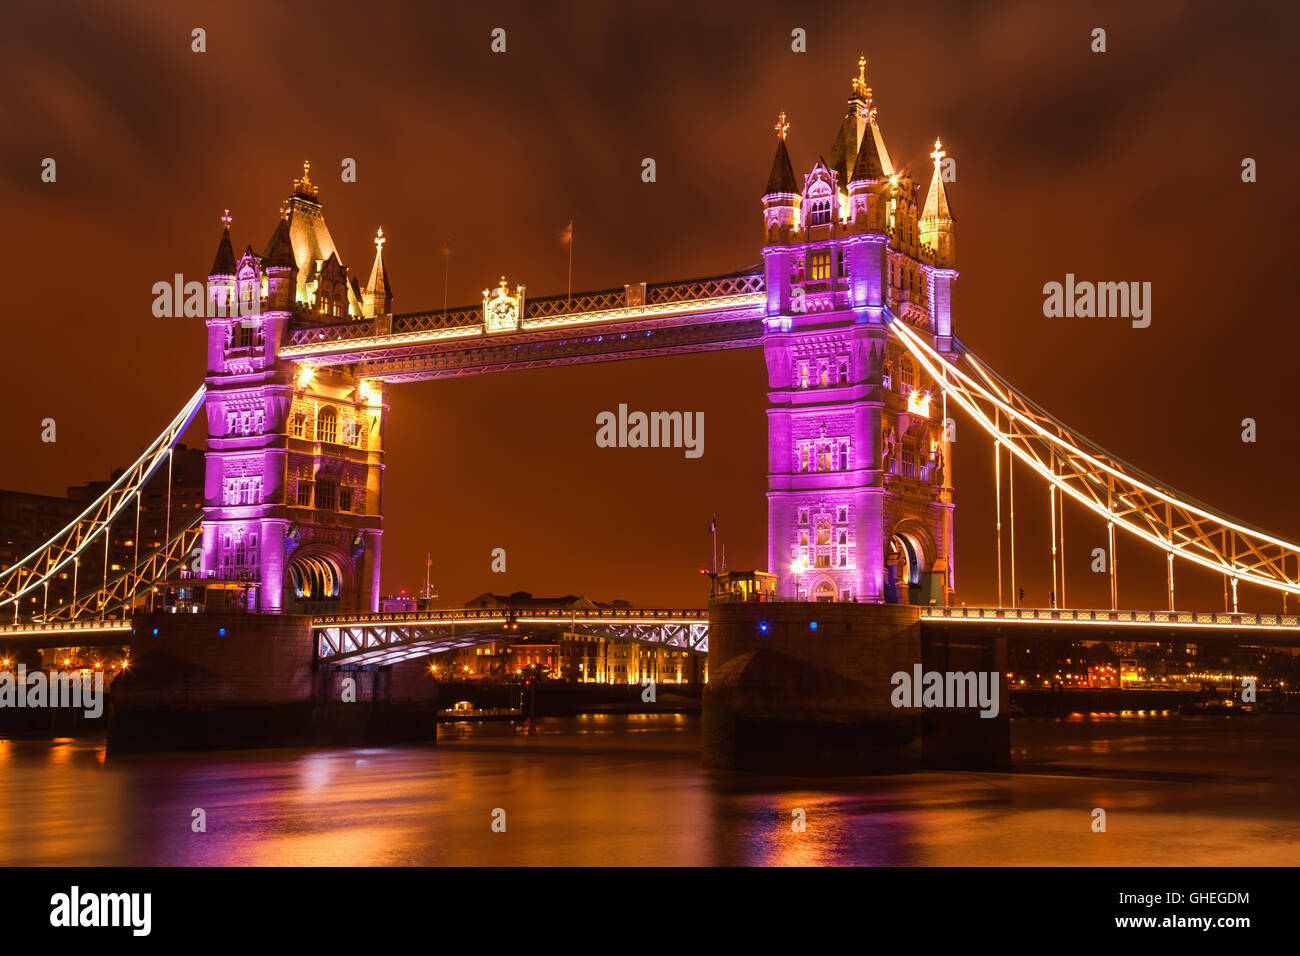 View of Tower Bridge festively illuminated. Stock Photo